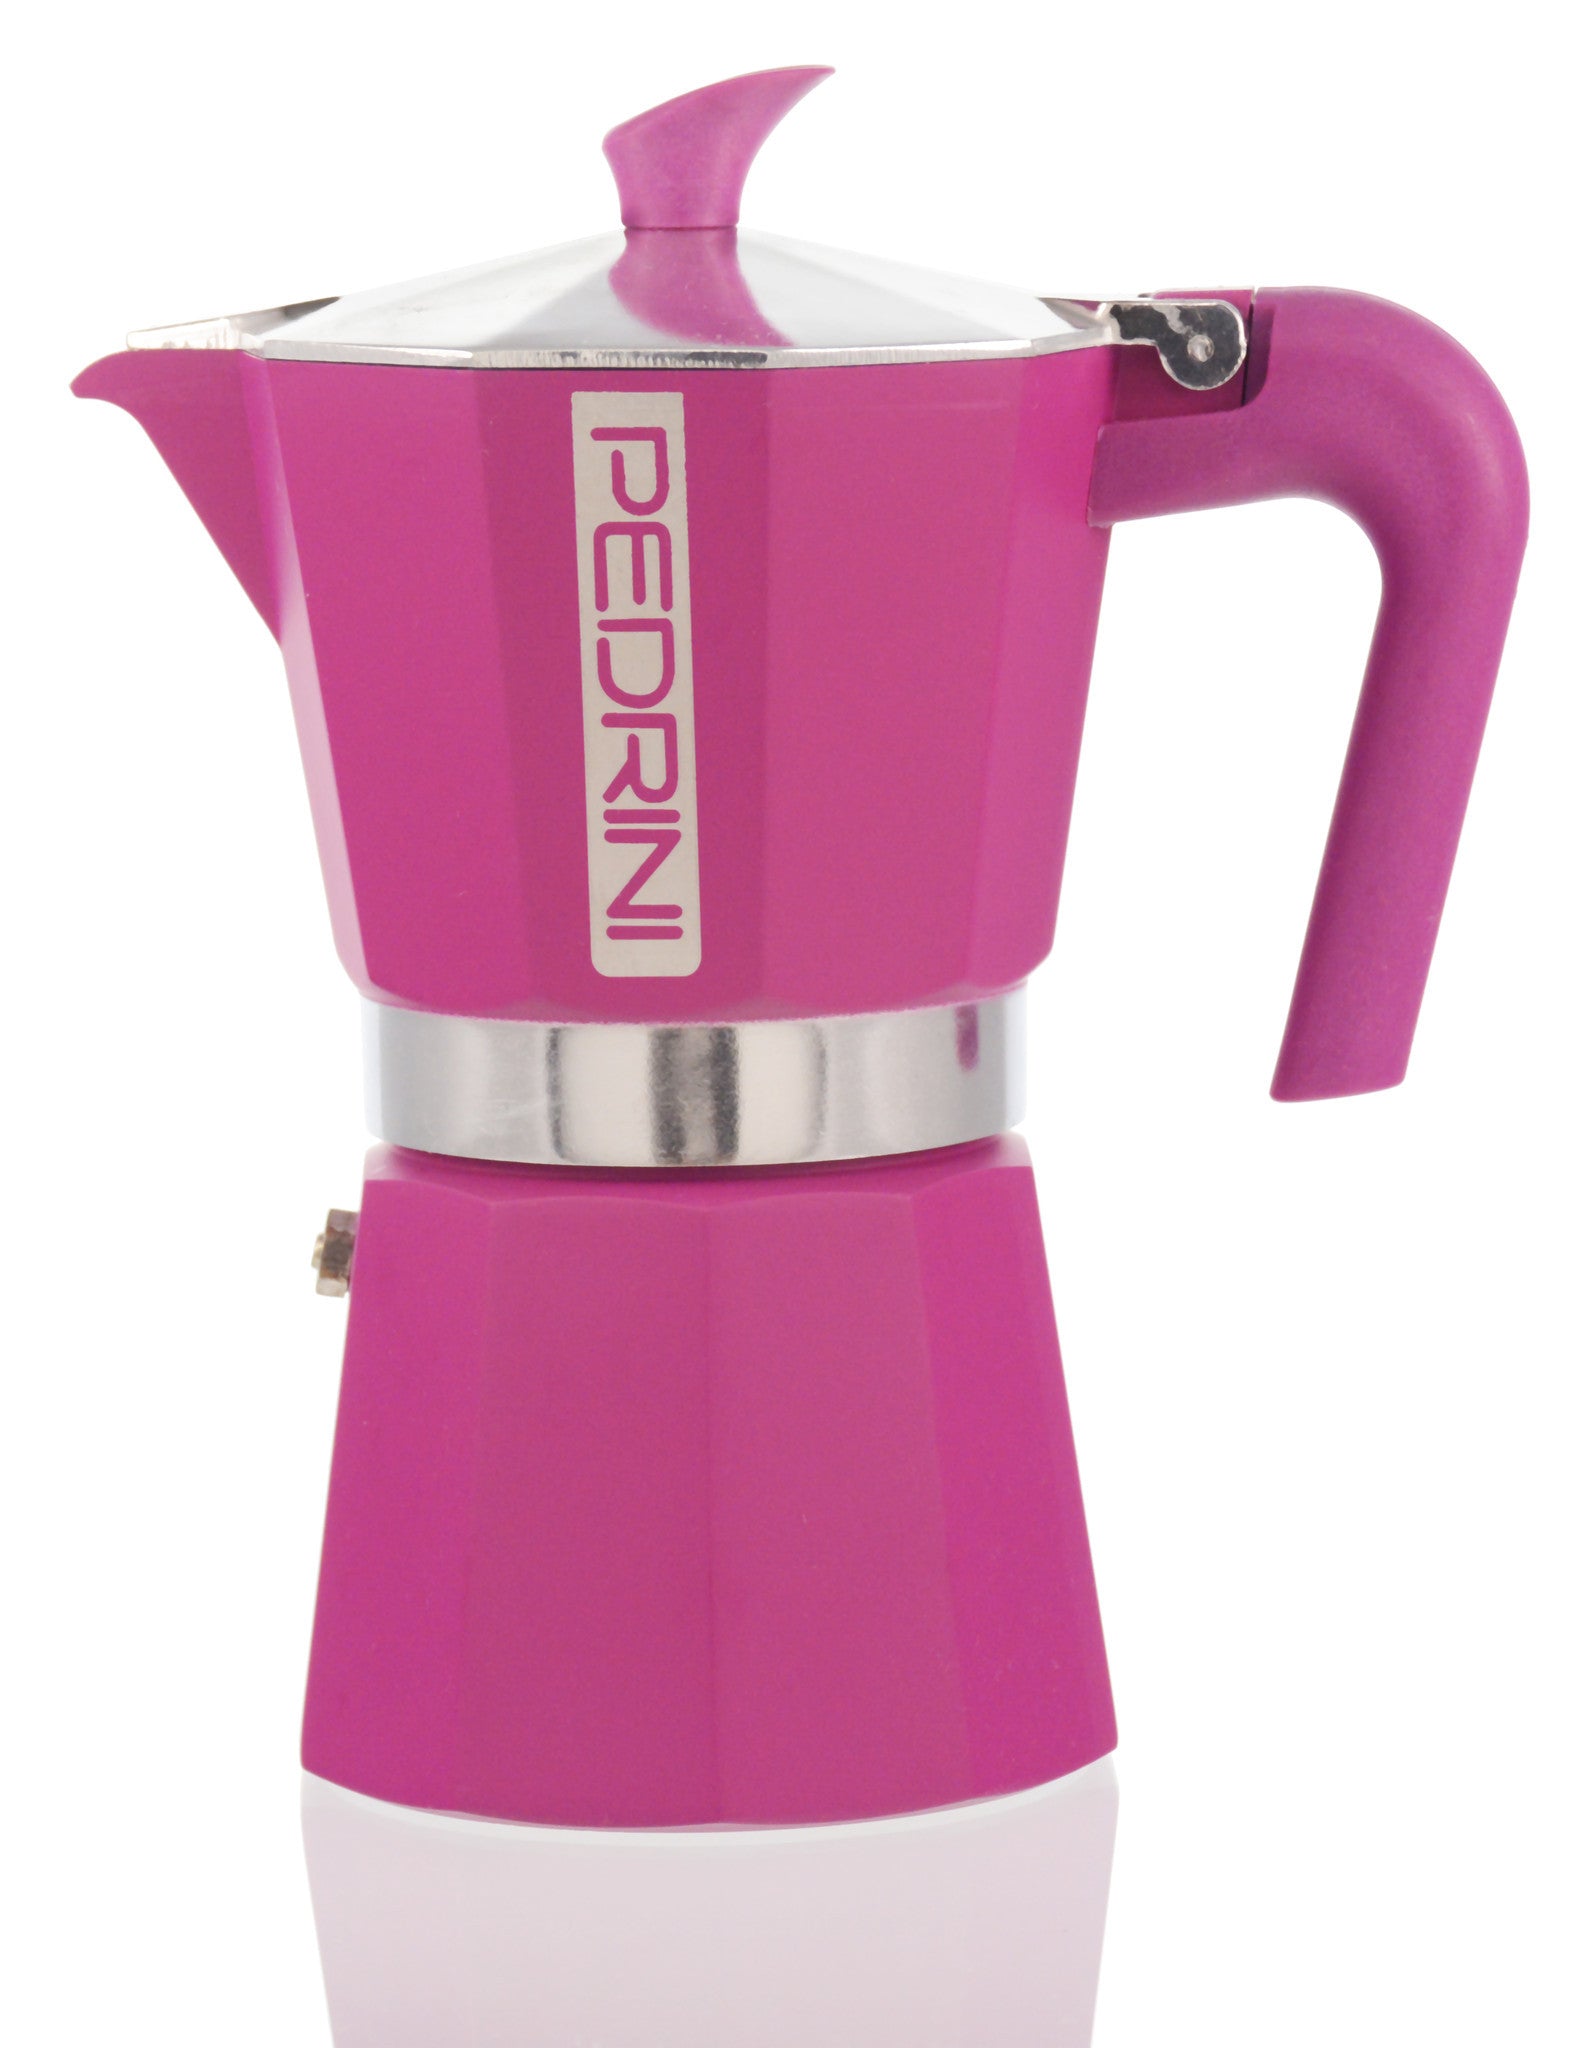 Celebration coffee maker 2,3 or 6 cups - Pedrini